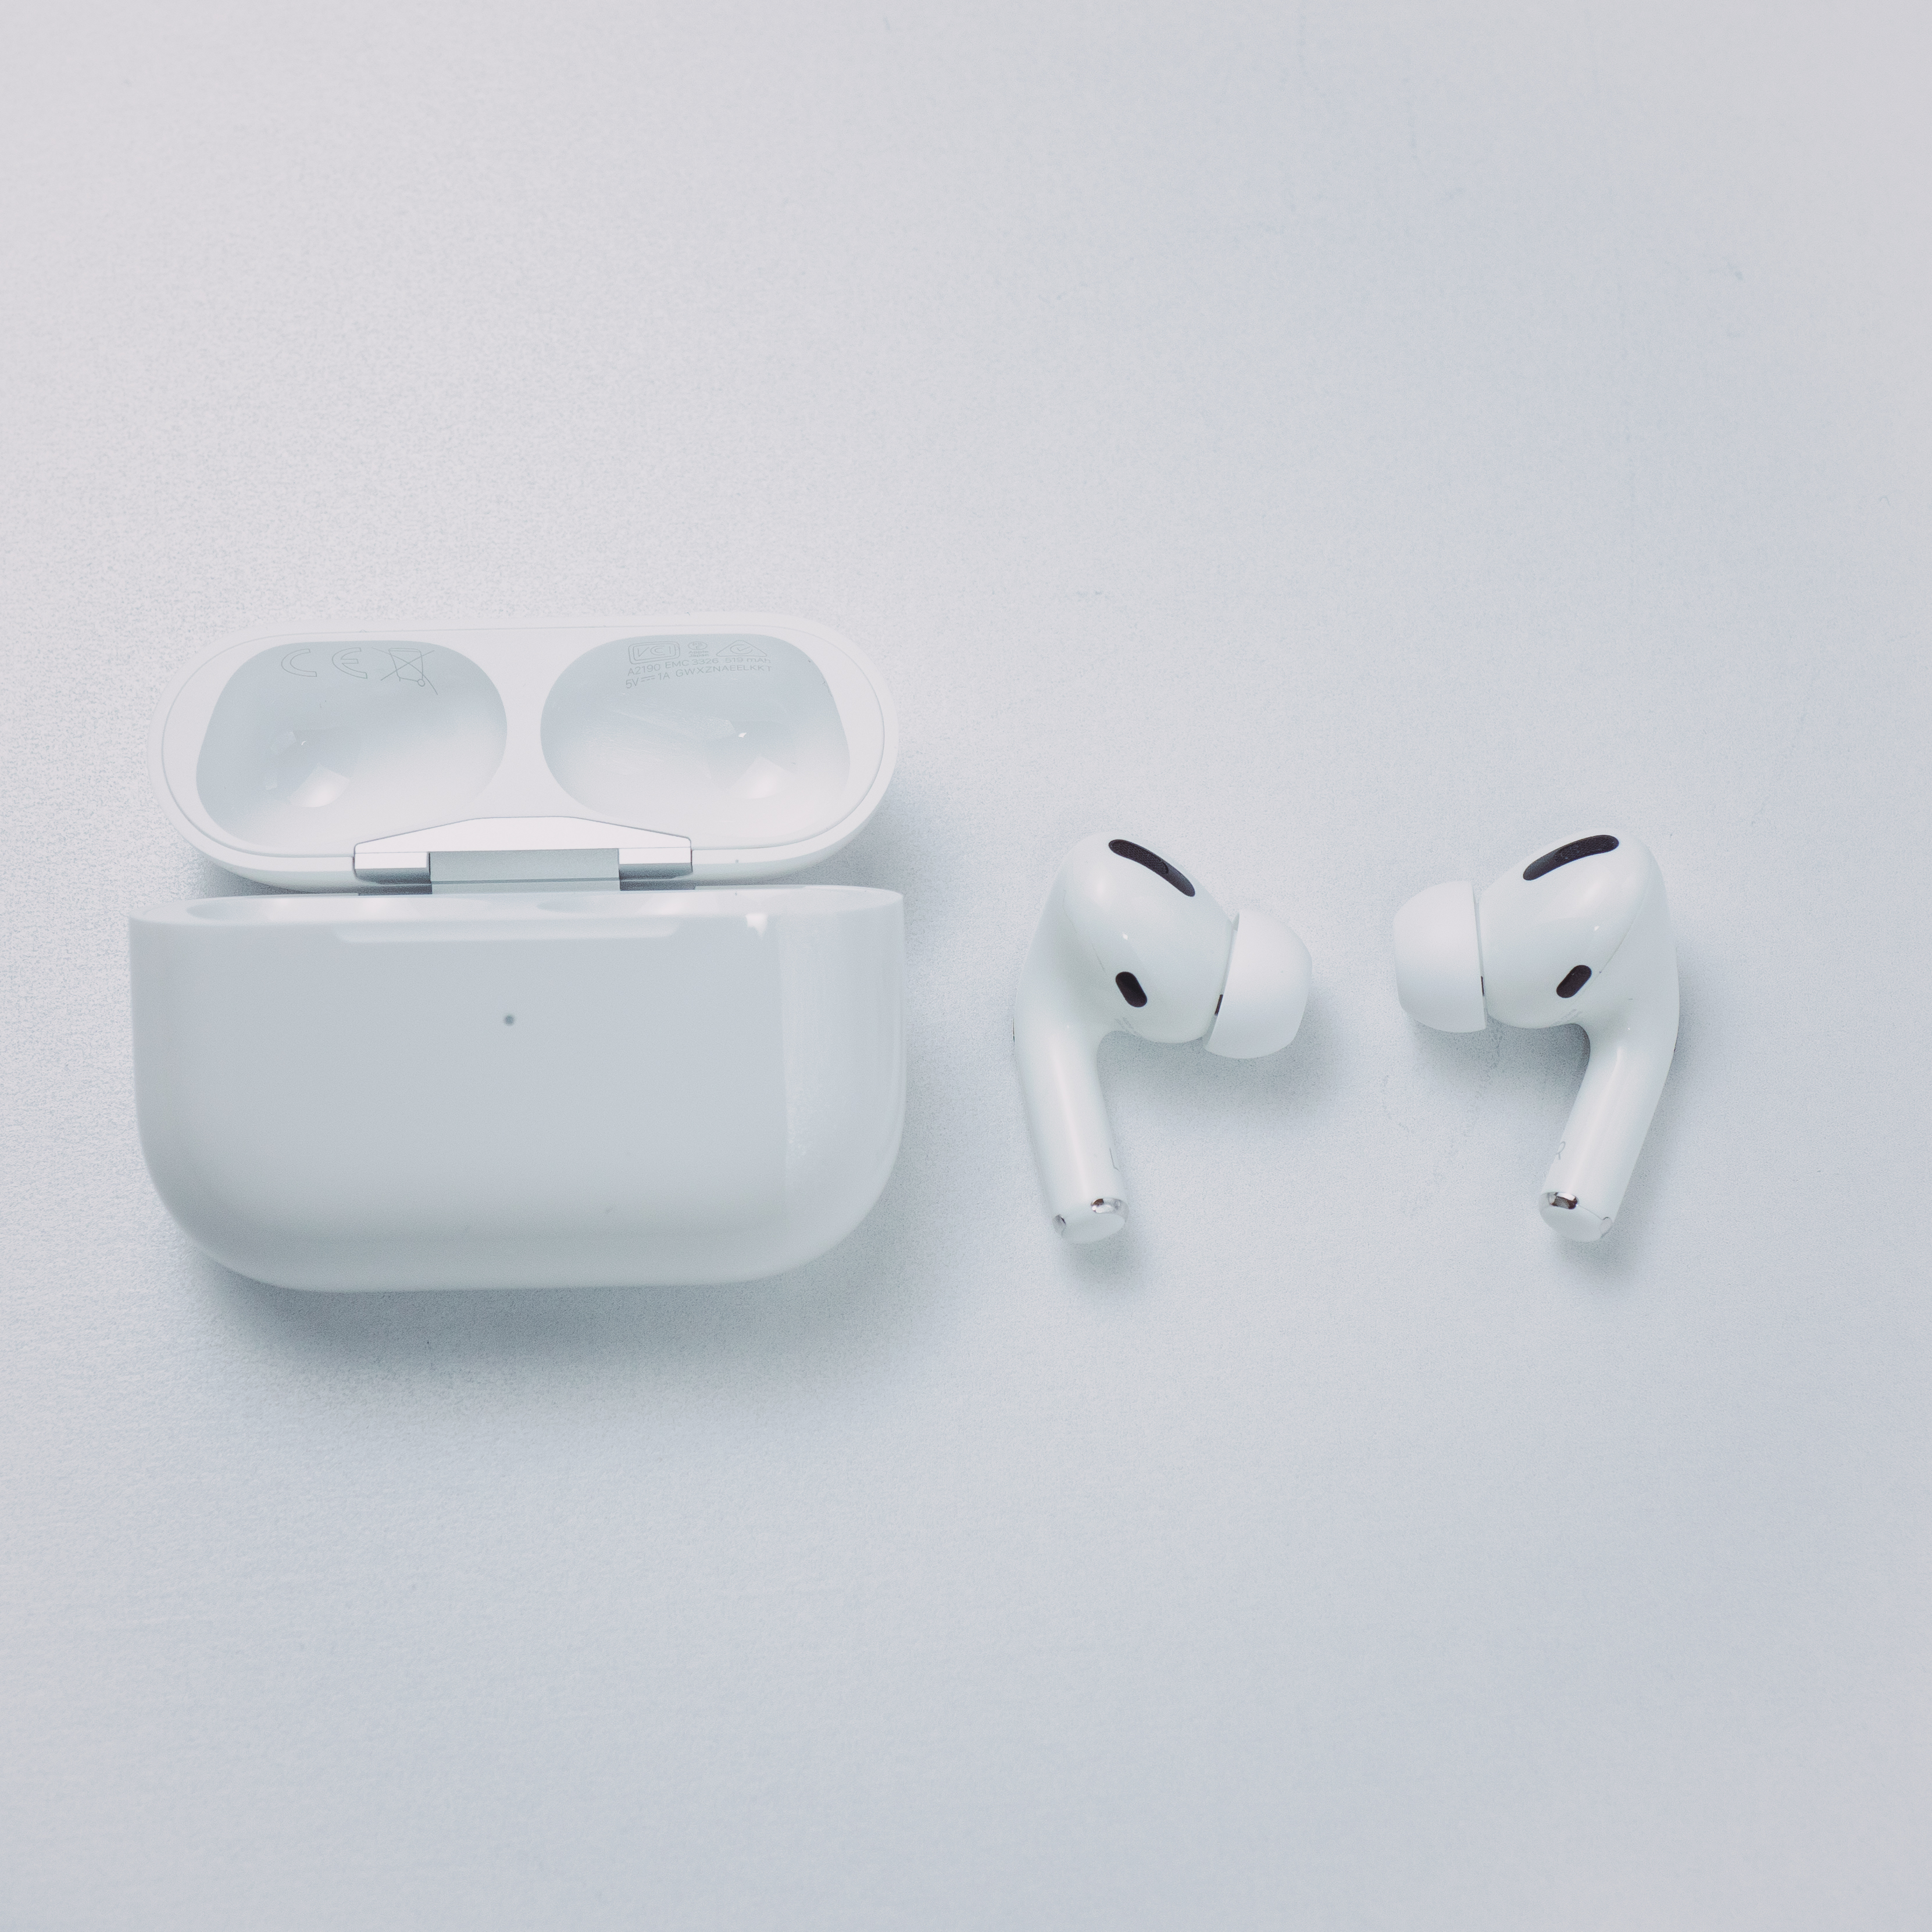 Apple AirPods Proレビュー、無印AirPodsとの比較あり - E-M-Wonderful